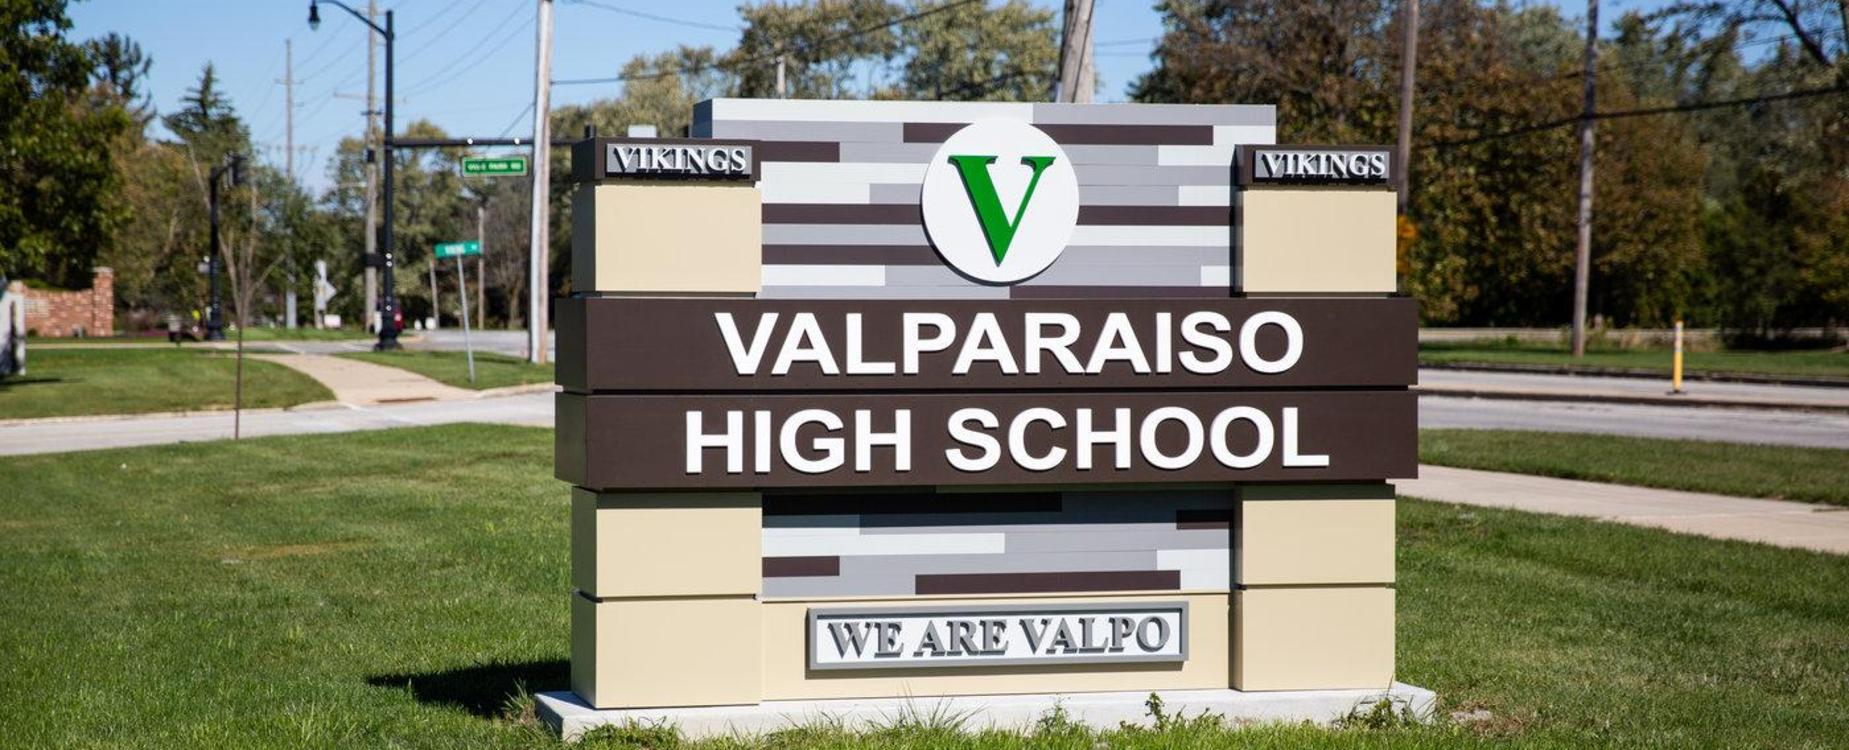 washington township high school valparaiso in